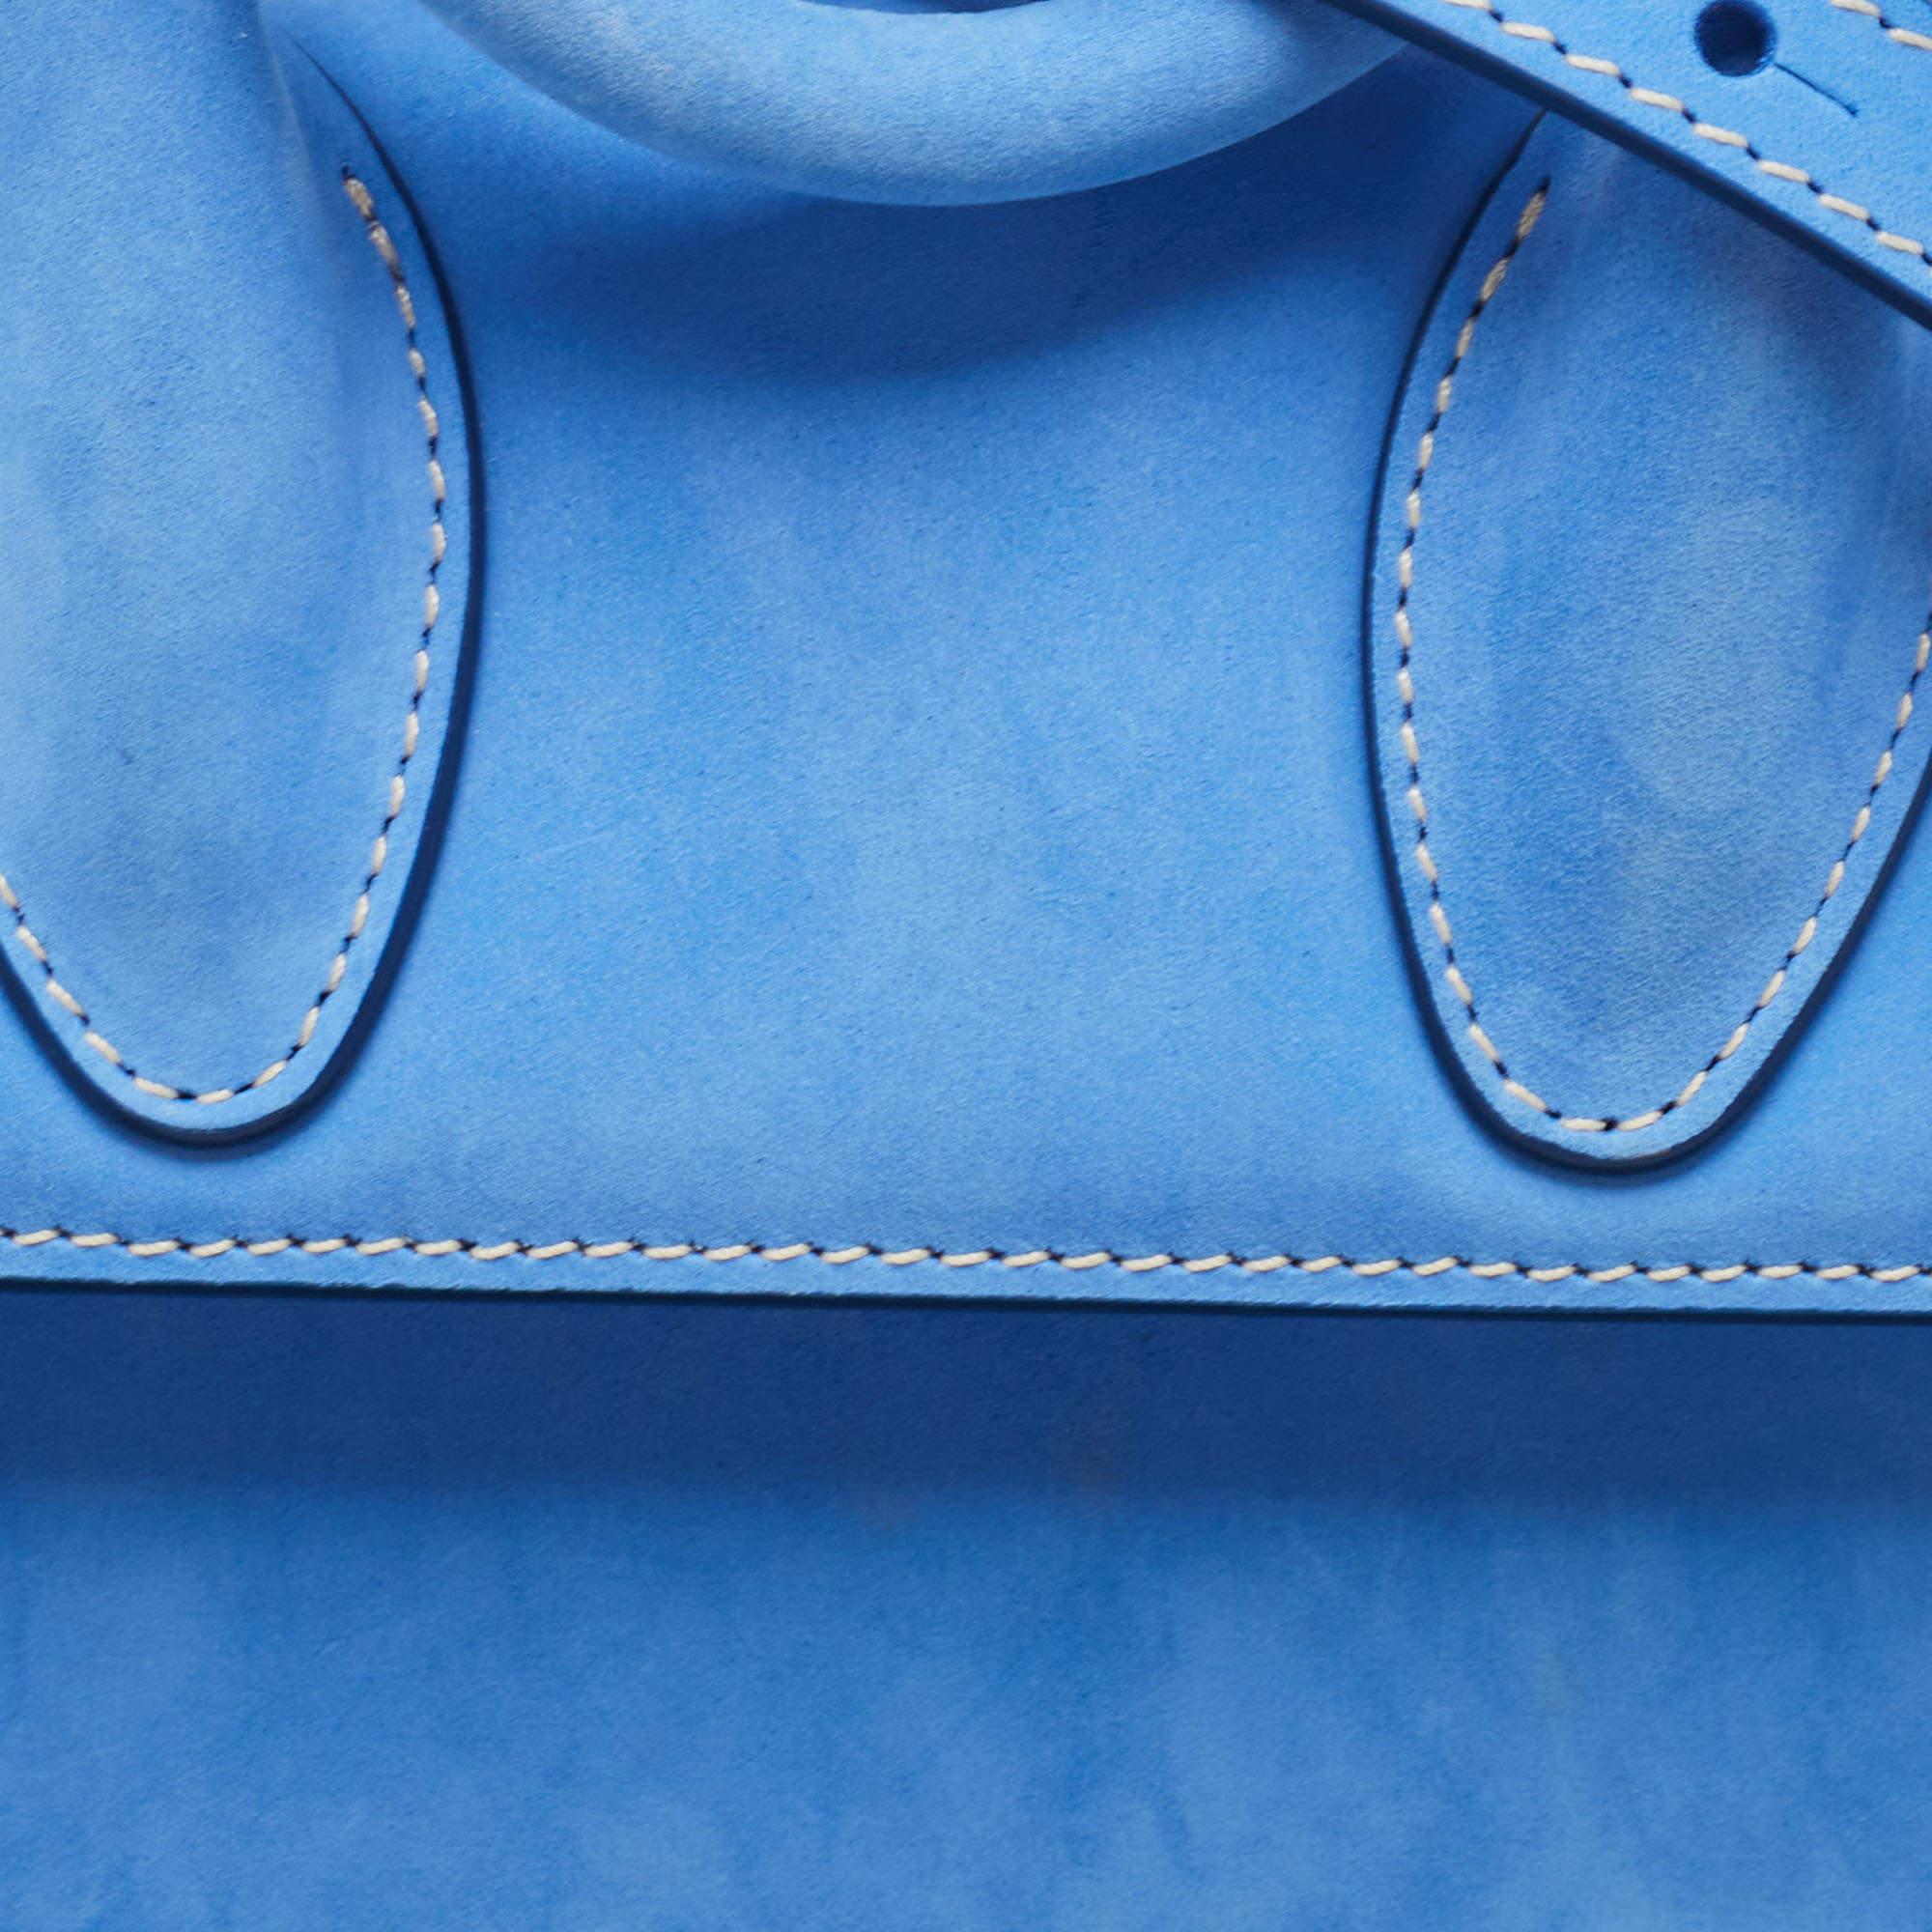 Jacquemus Blue Nubuck Leather Le Chiquito Noeud Top Handle Bag 4